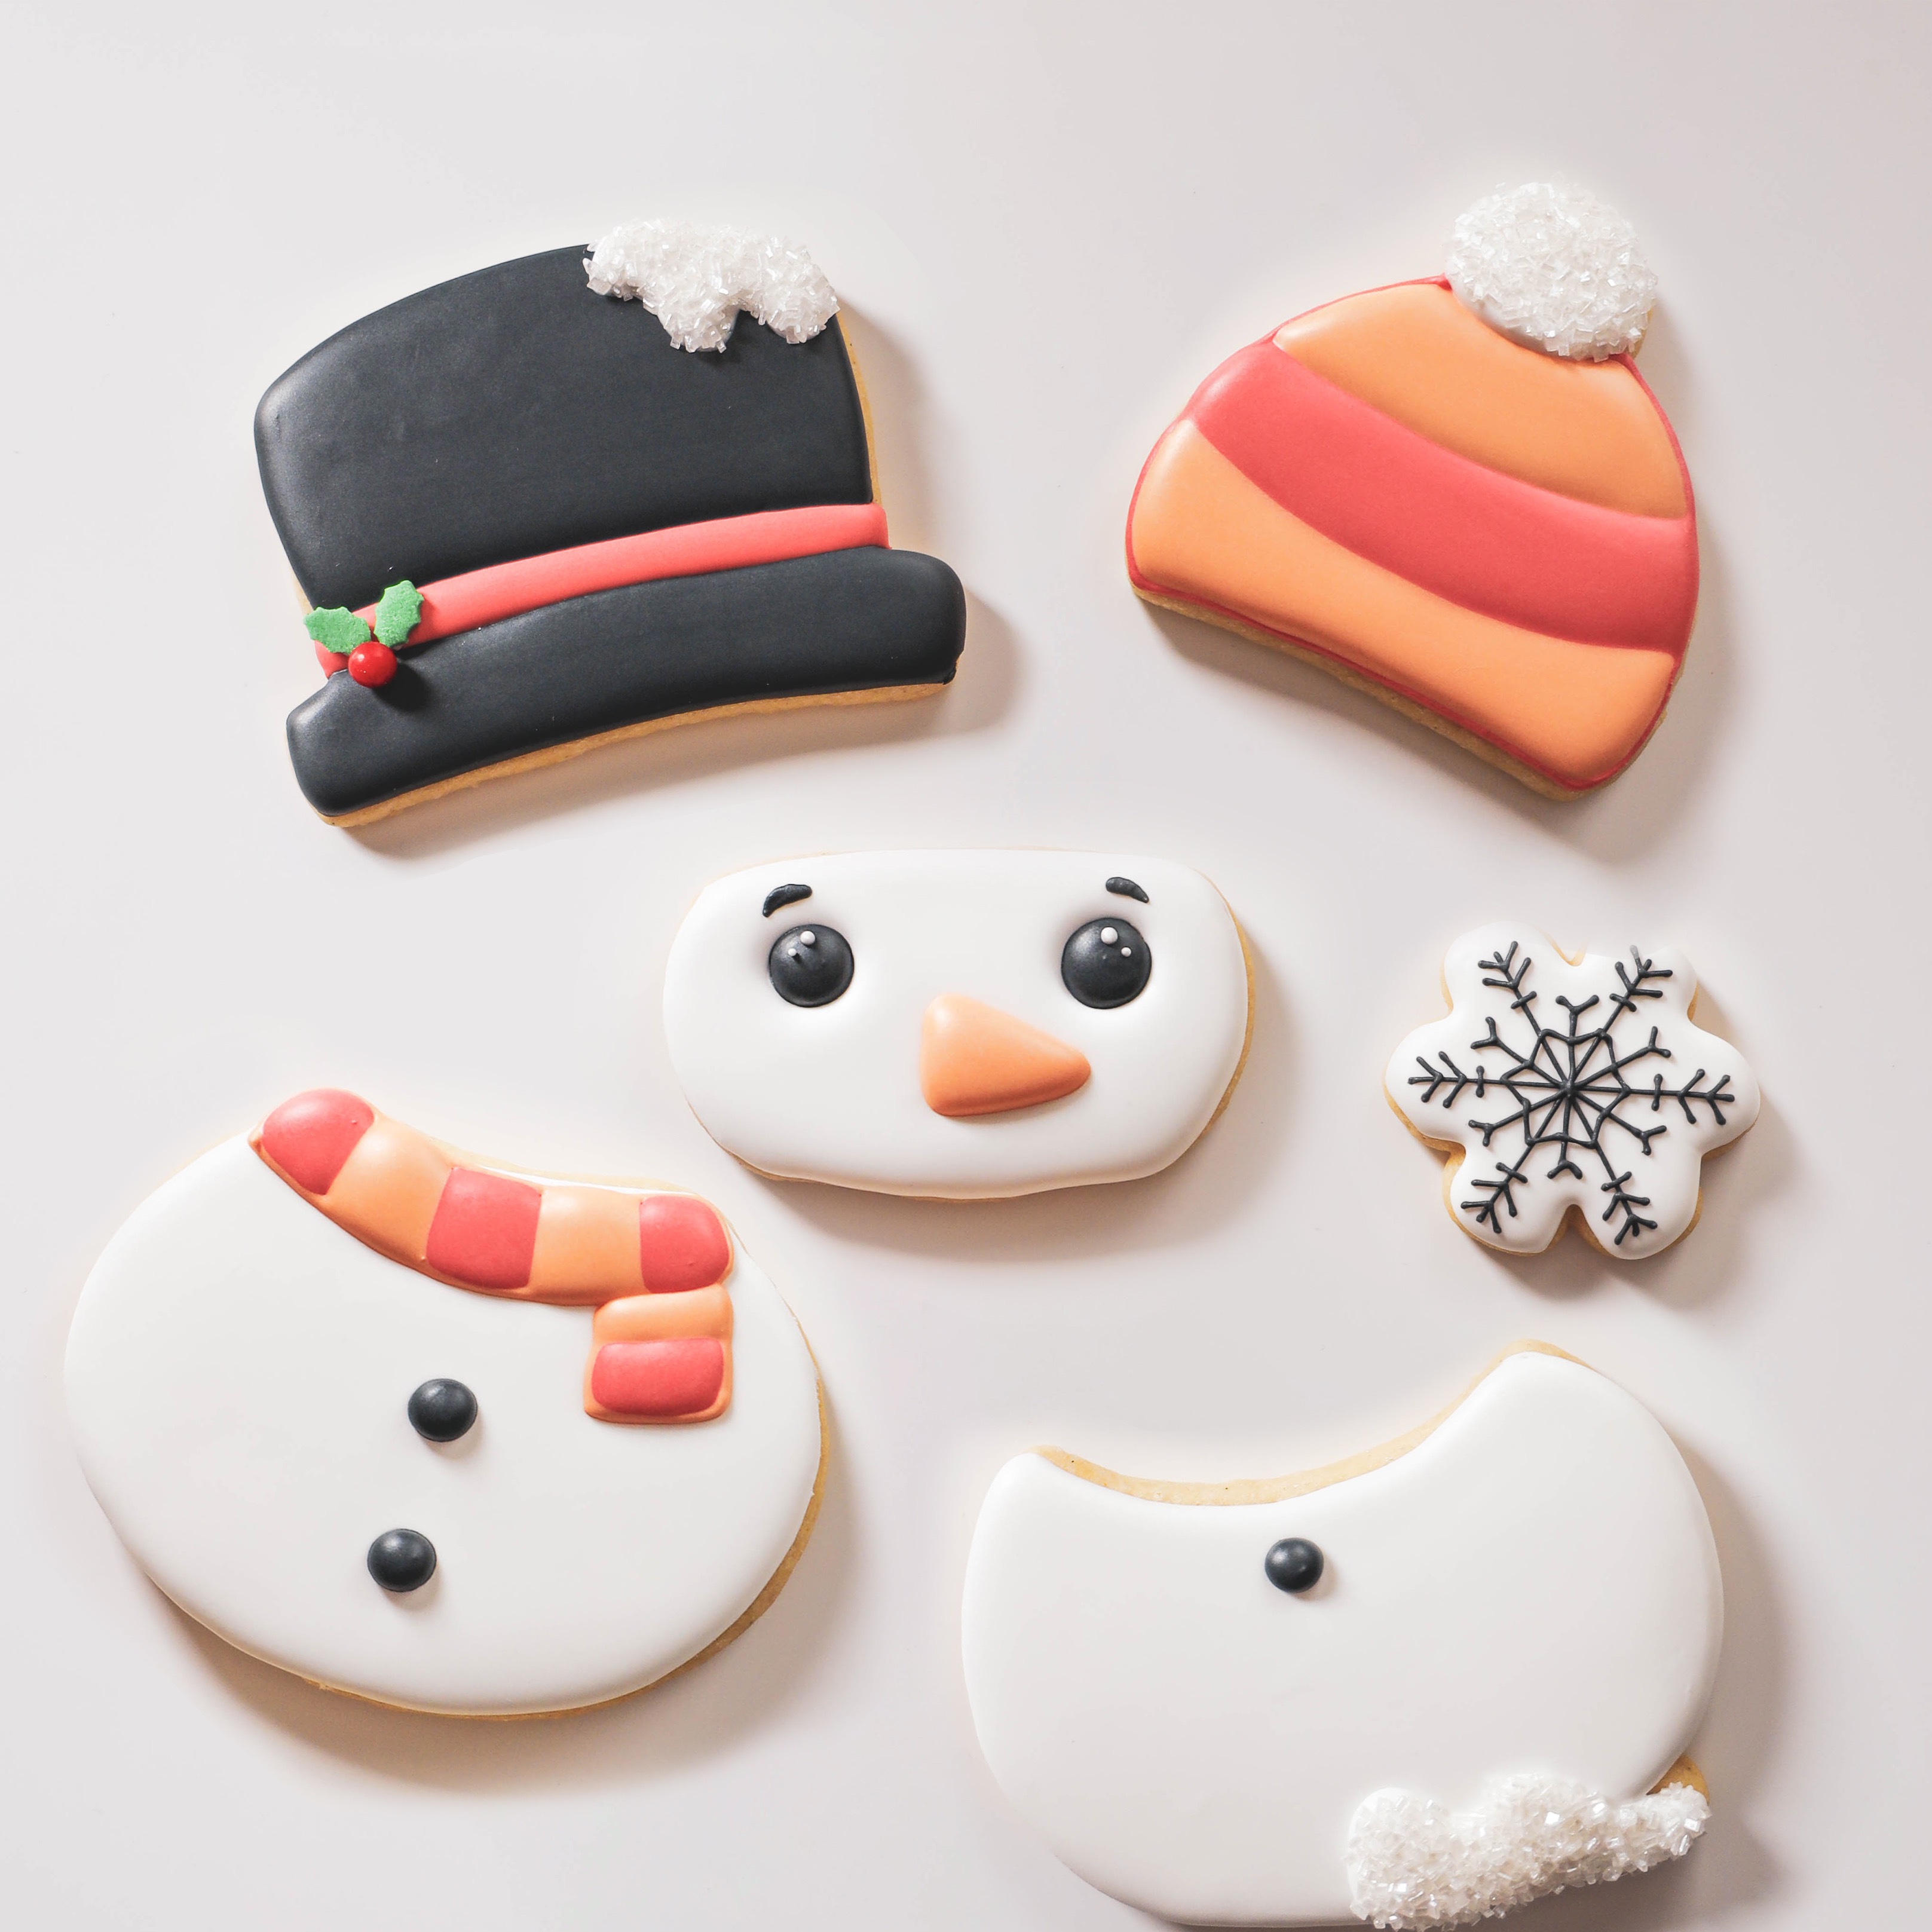 1/20 Sugar Snowman Cookie Decorating Class